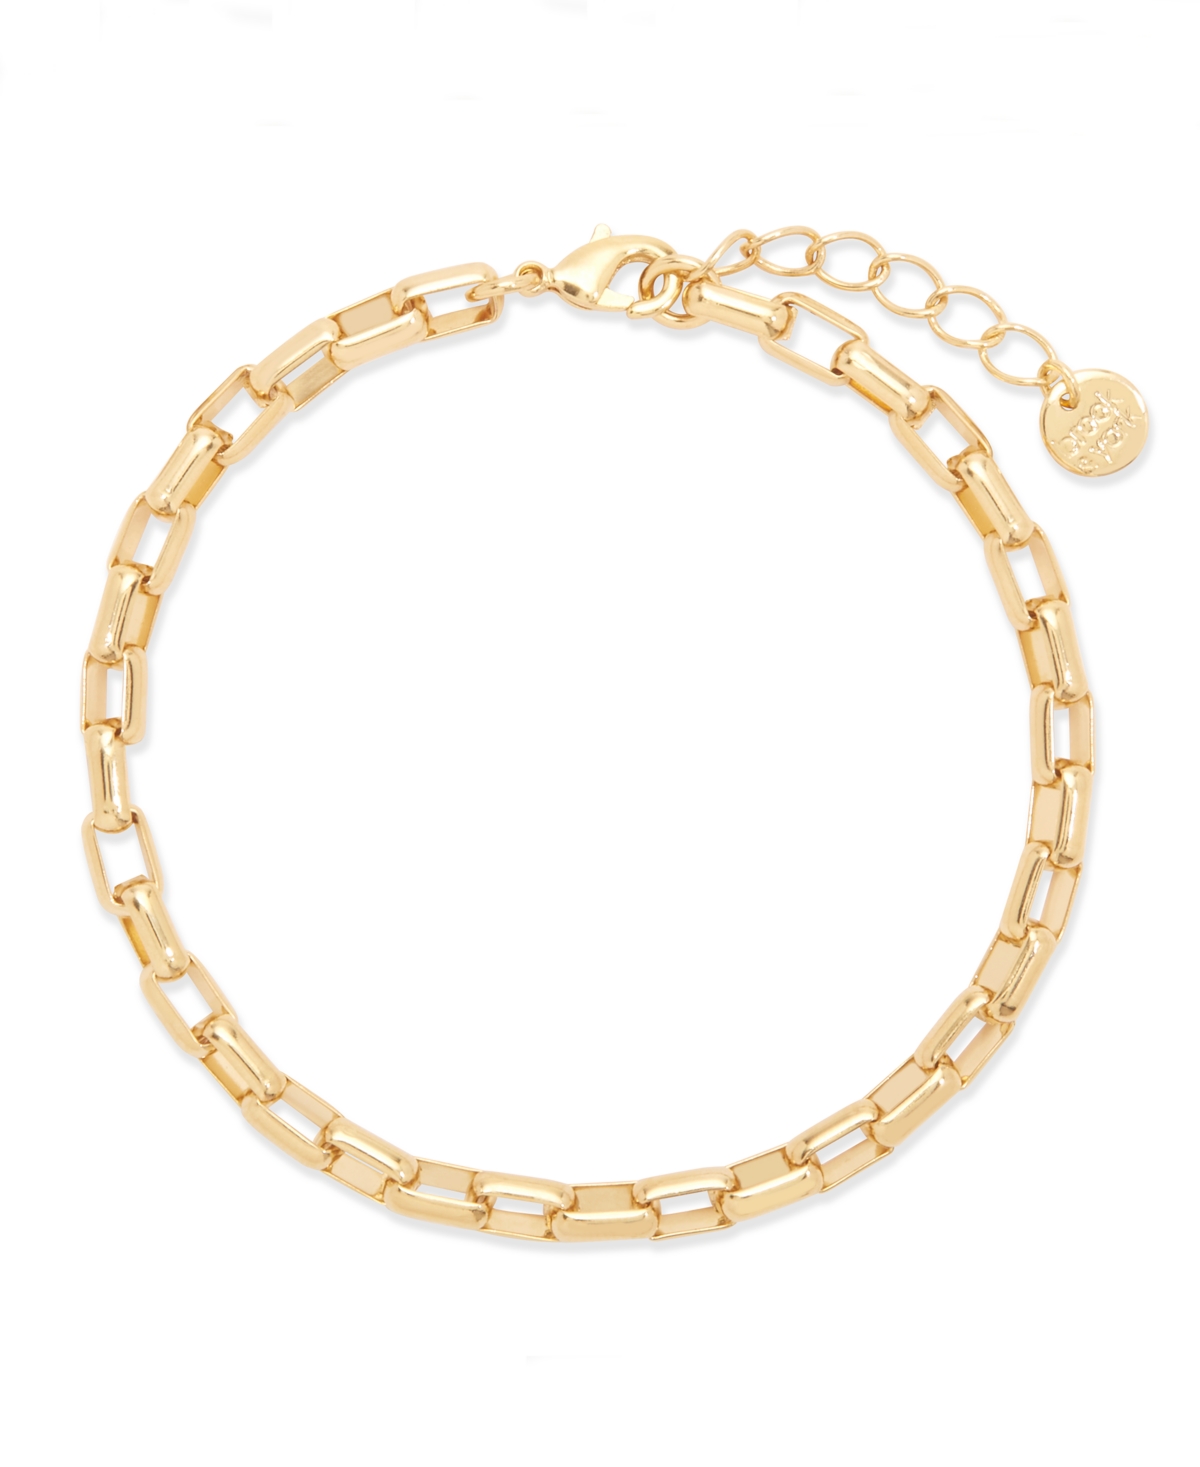 Brook & York 14k Gold-plated Marci Chain Bracelet